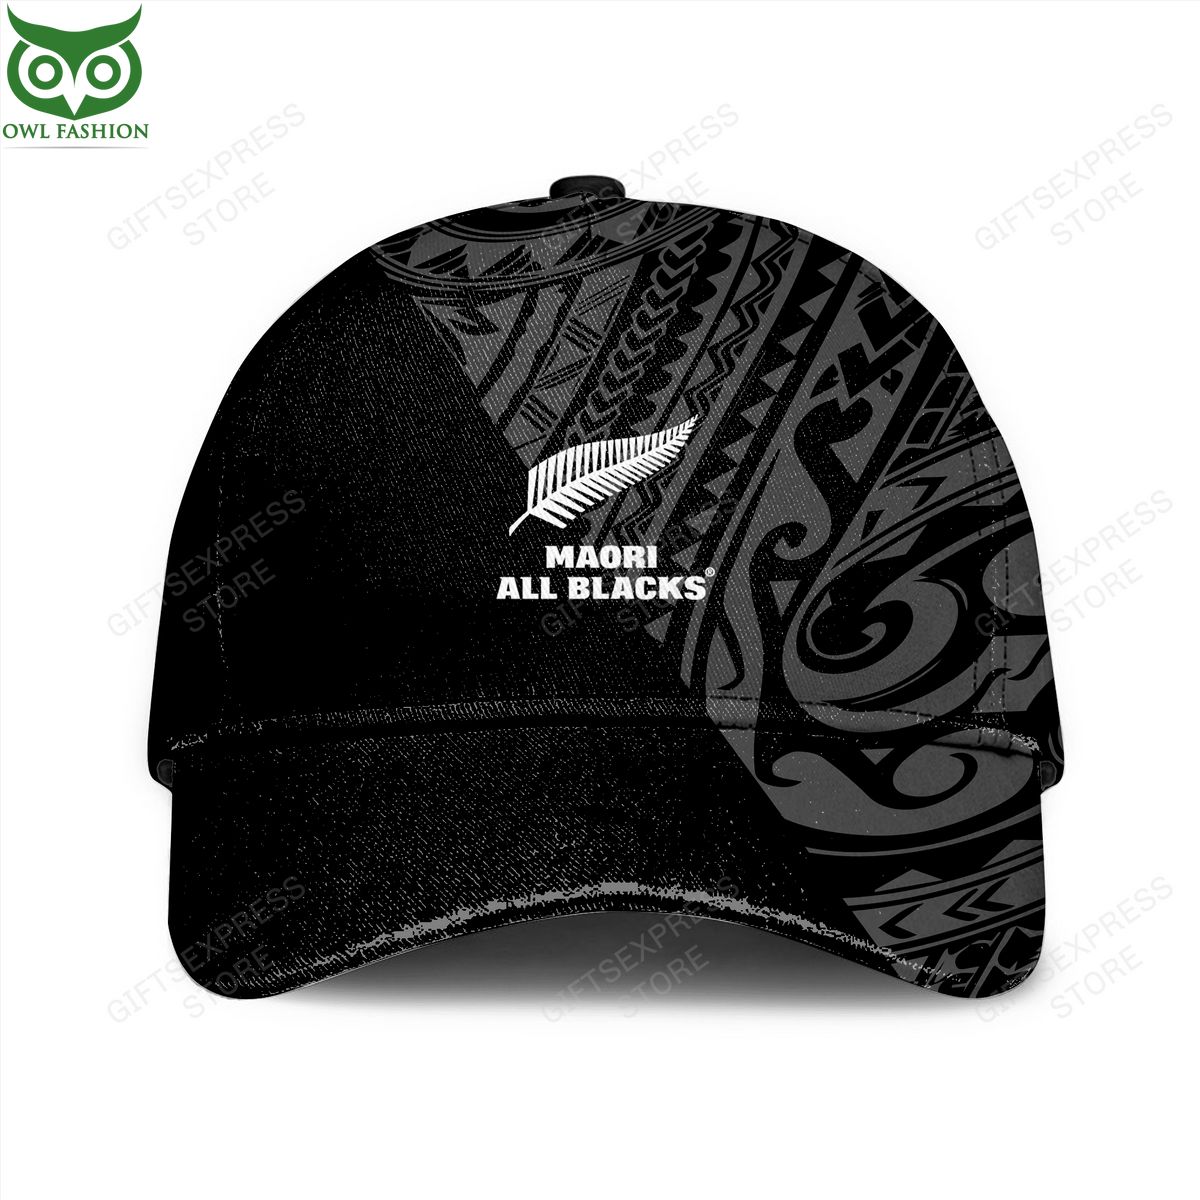 All Blacks Maori Limited Classic Cap